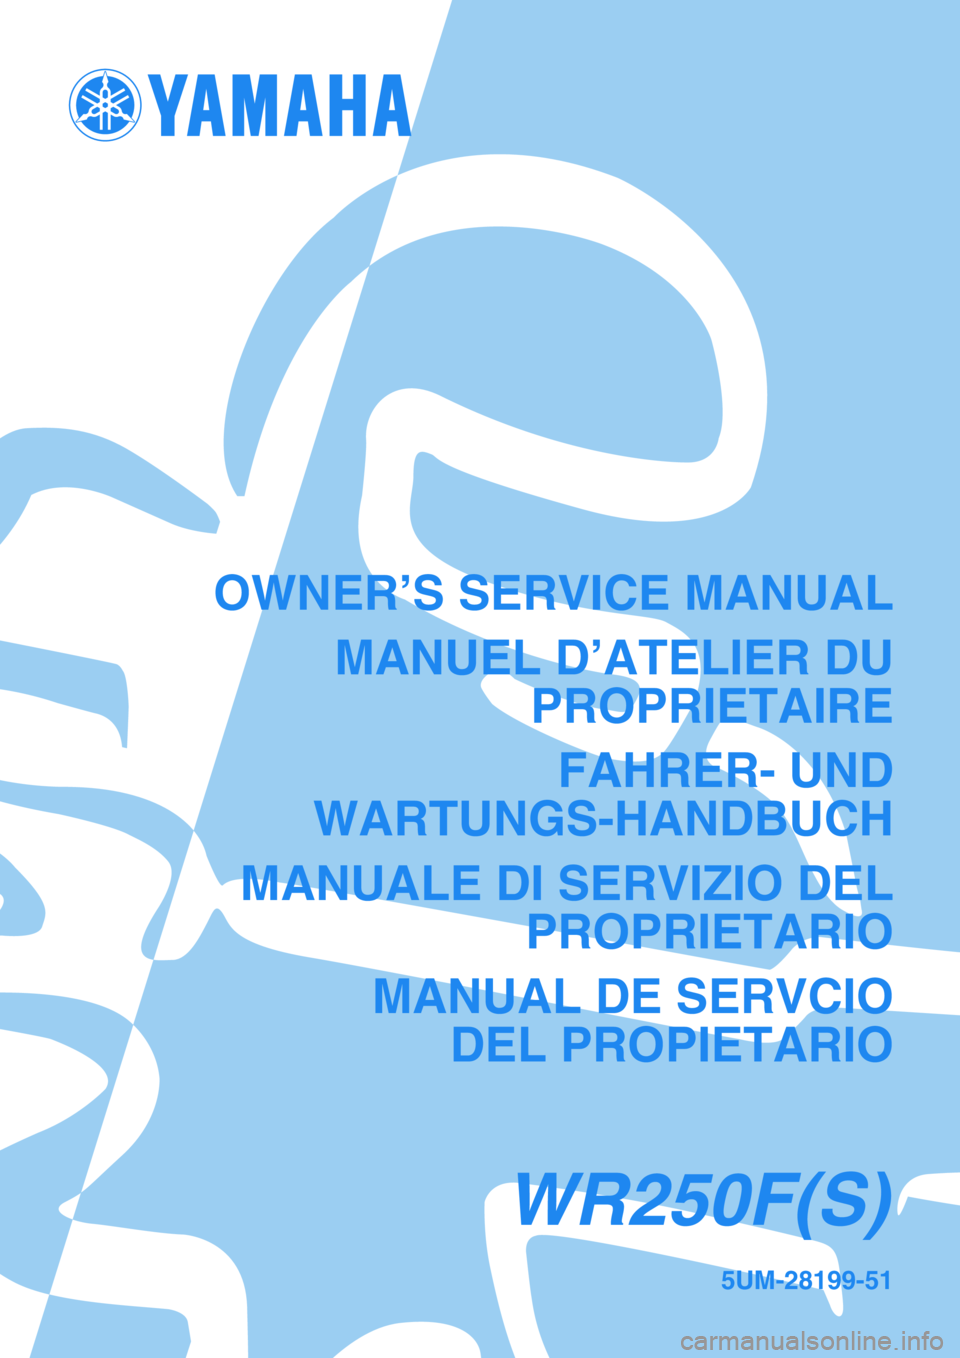 YAMAHA WR 250F 2004  Betriebsanleitungen (in German) 5UM-28199-51
WR250F(S)
OWNER’S SERVICE MANUAL
MANUEL D’ATELIER DU
PROPRIETAIRE
FAHRER- UND
WARTUNGS-HANDBUCH
MANUALE DI SERVIZIO DEL
PROPRIETARIO
MANUAL DE SERVCIO
DEL PROPIETARIO 